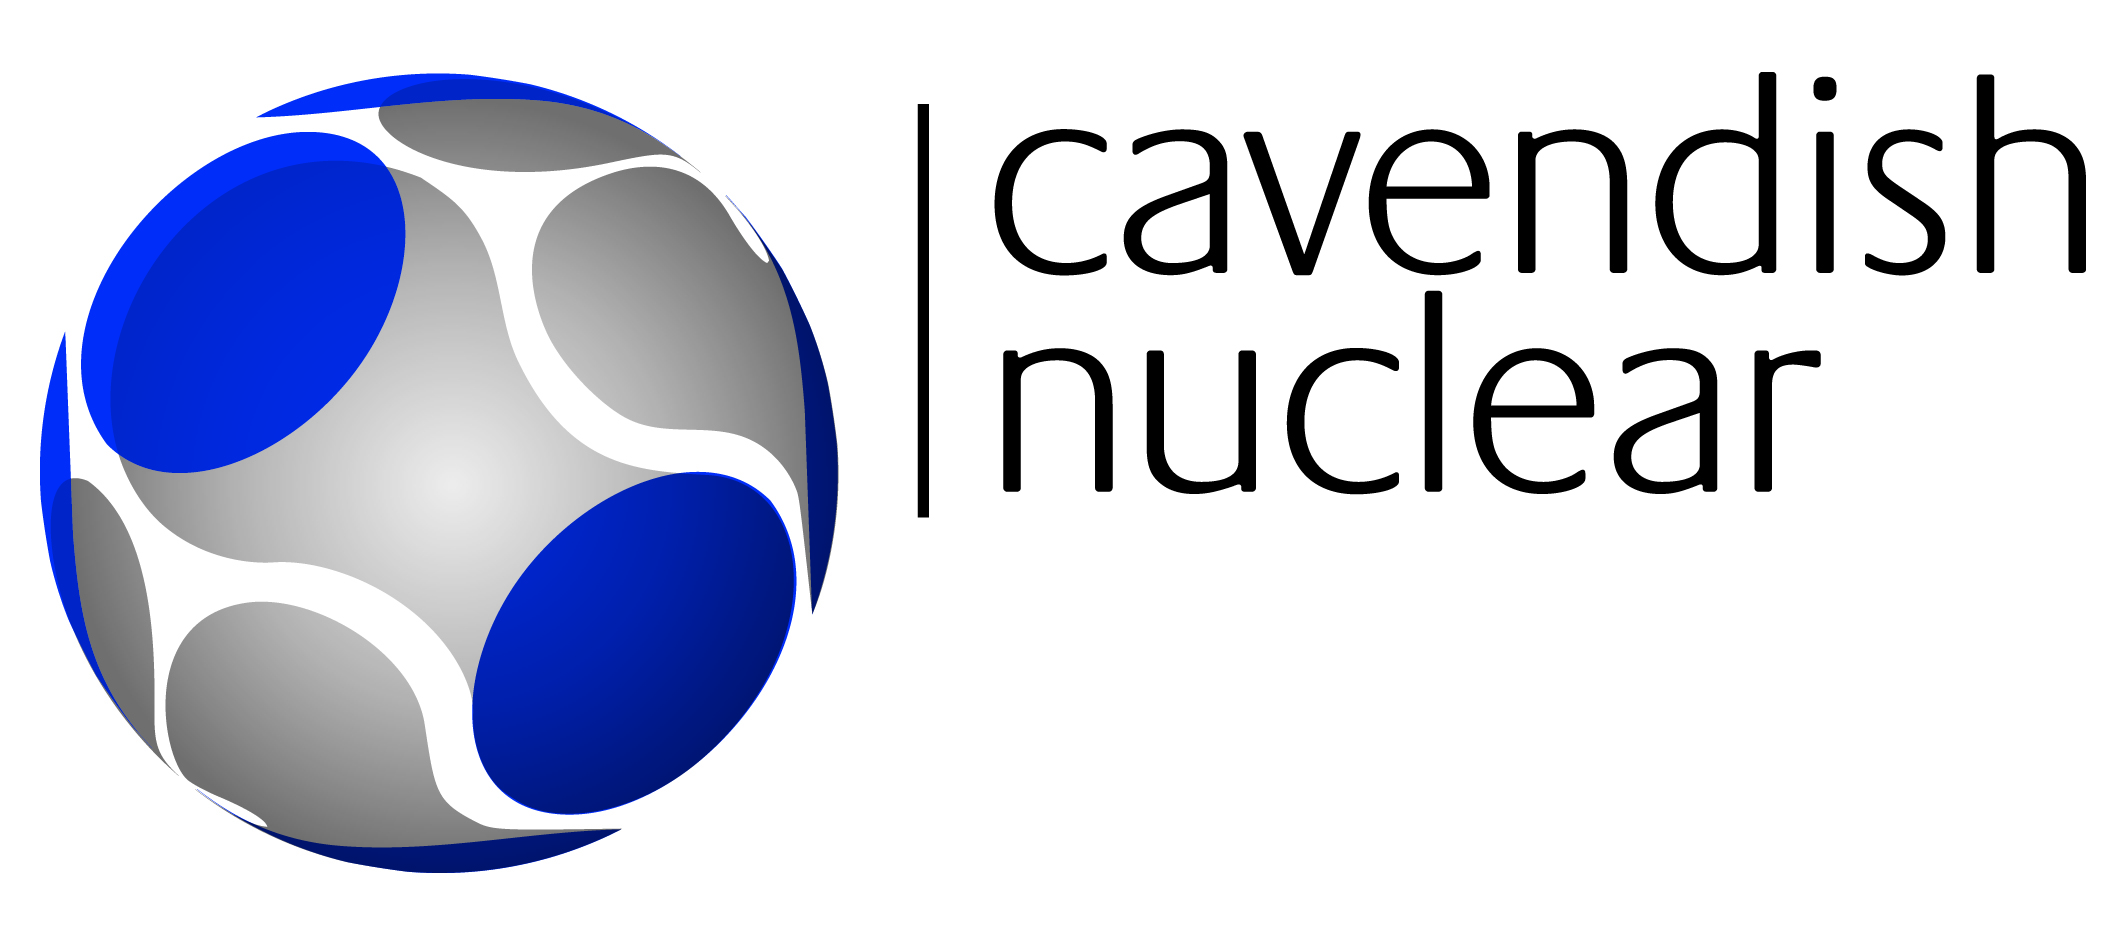 CavendishNuclear 4col PRINT